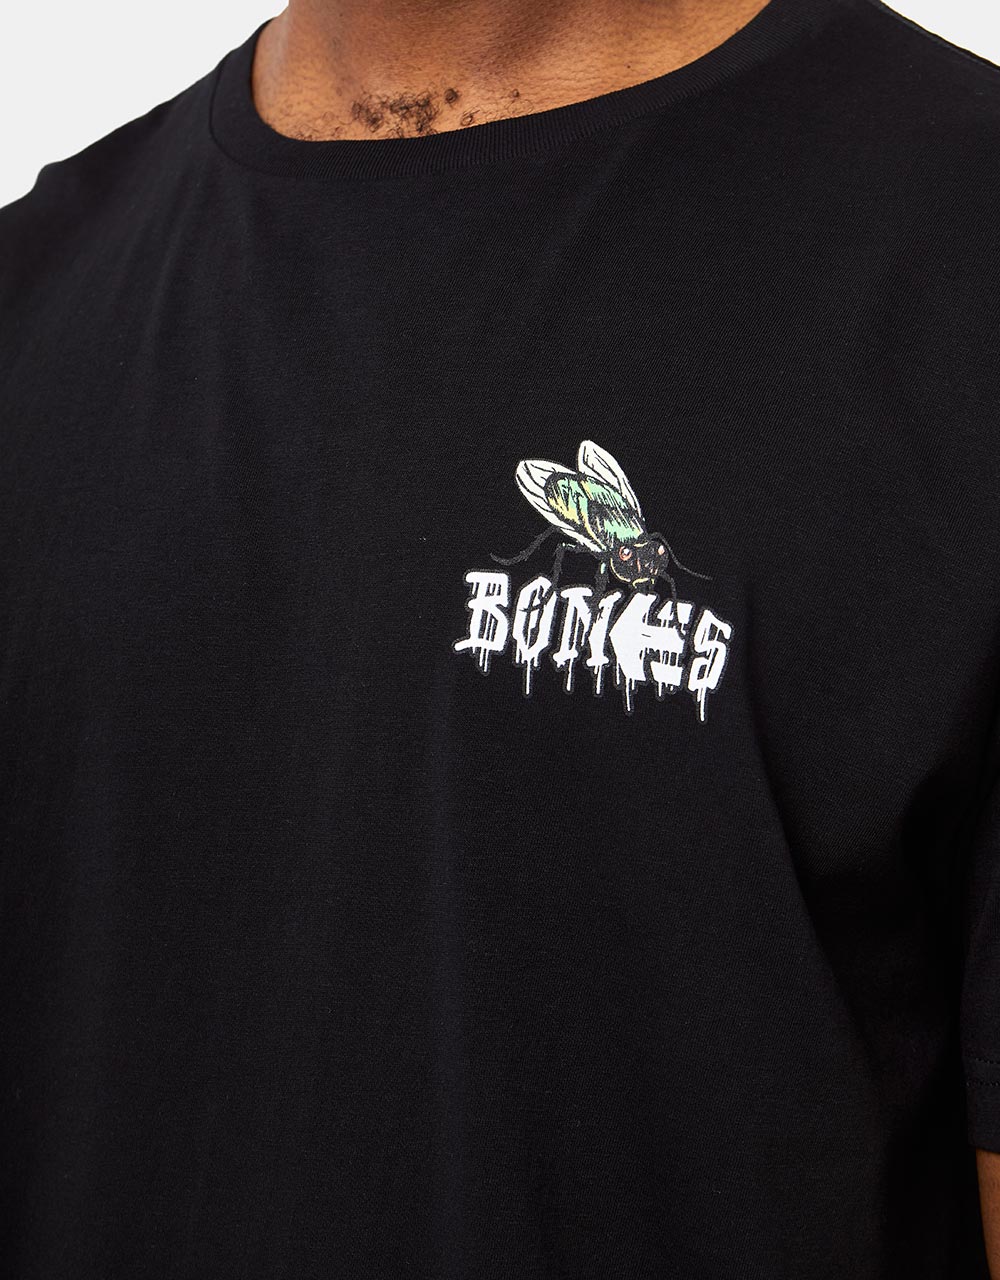 Etnies x Bones Berger T-Shirt - Worn Black